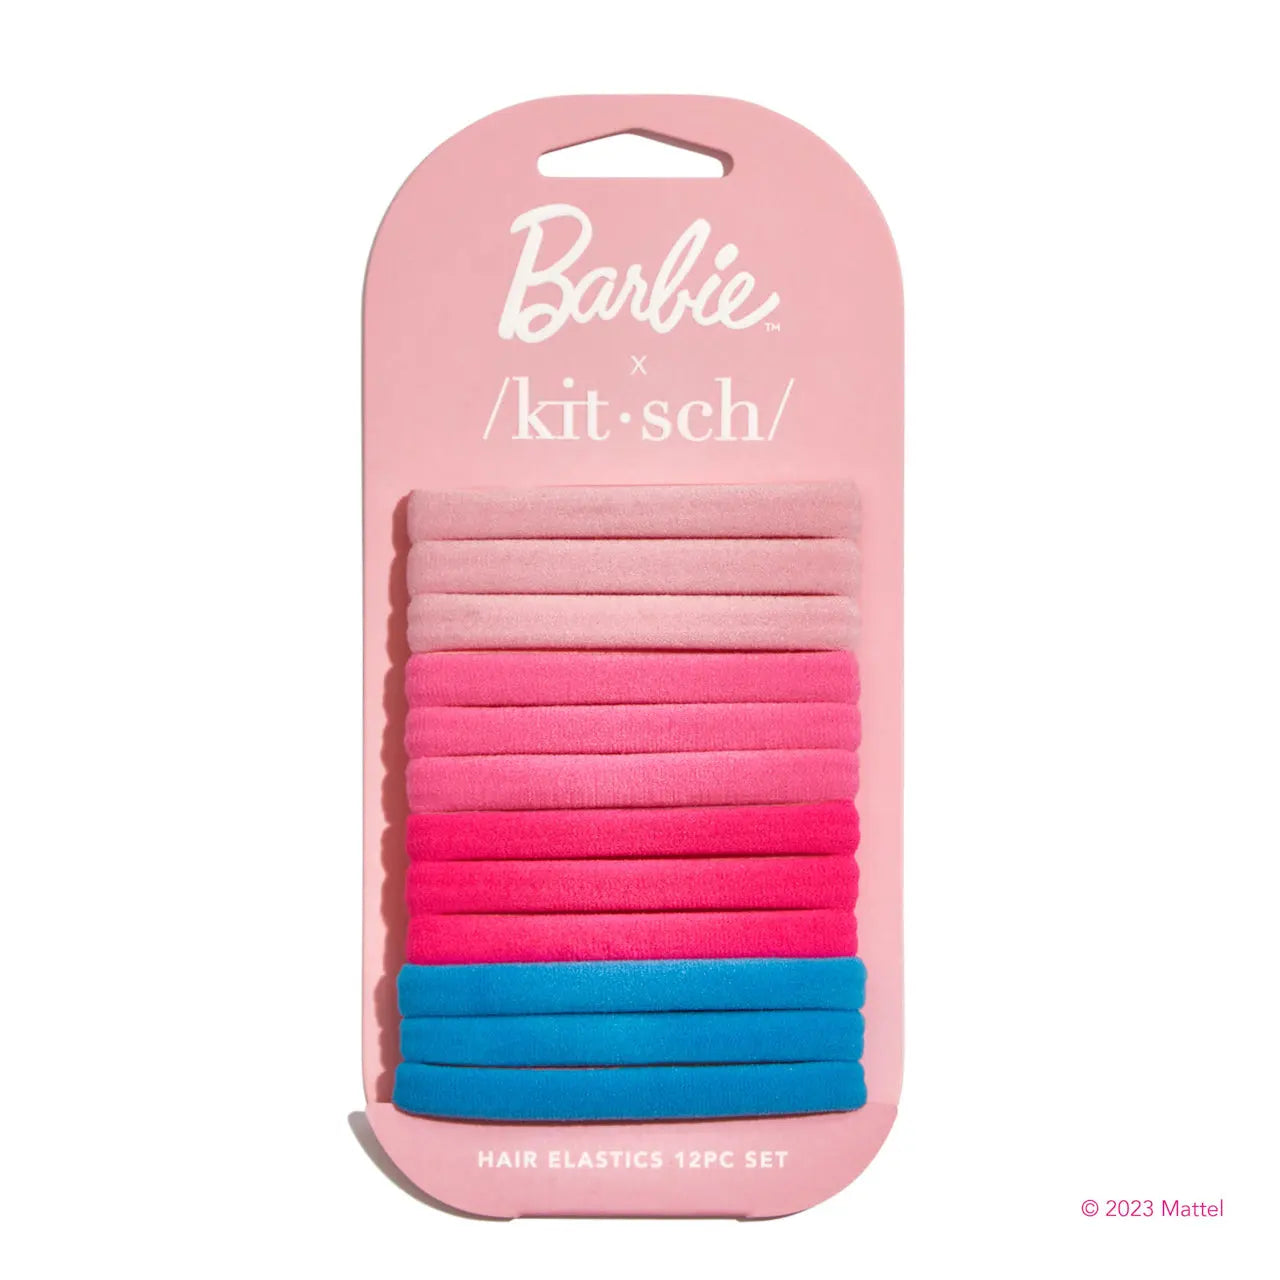 Kitsch - Barbie Recycled Nylon Elastics 12pc